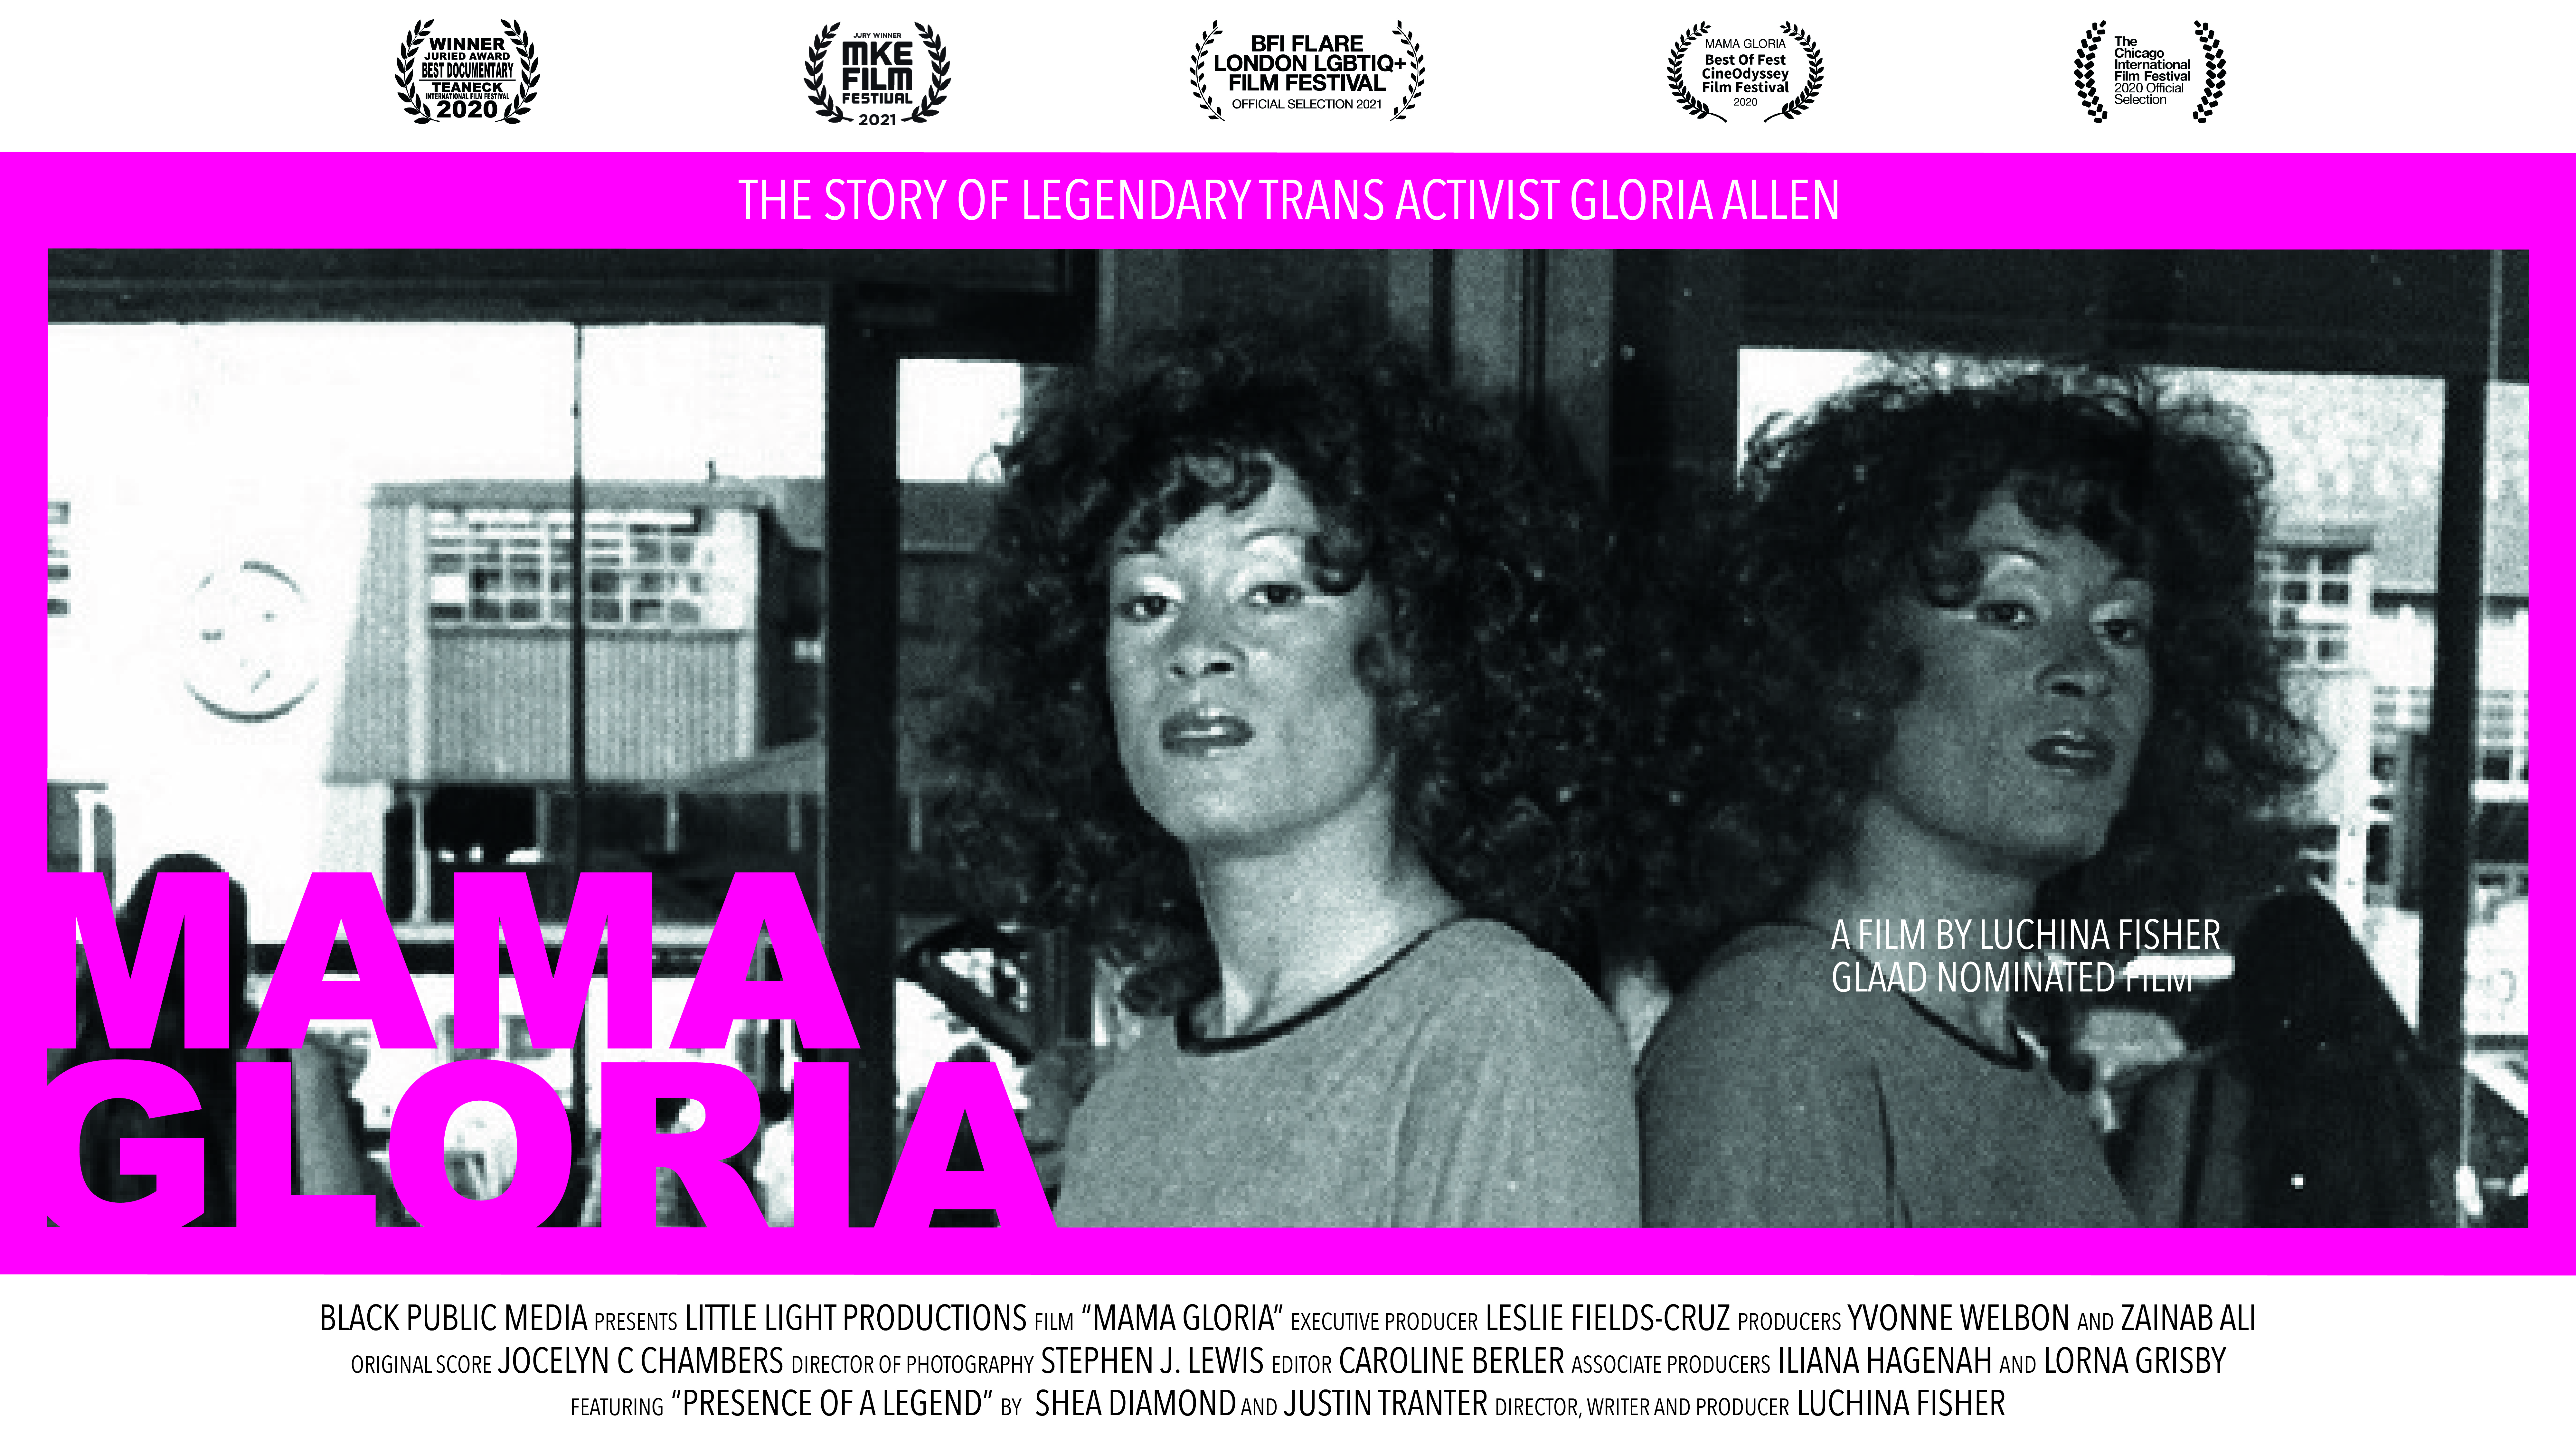 MAMA GLORIA documentary film by Luchina Fisher